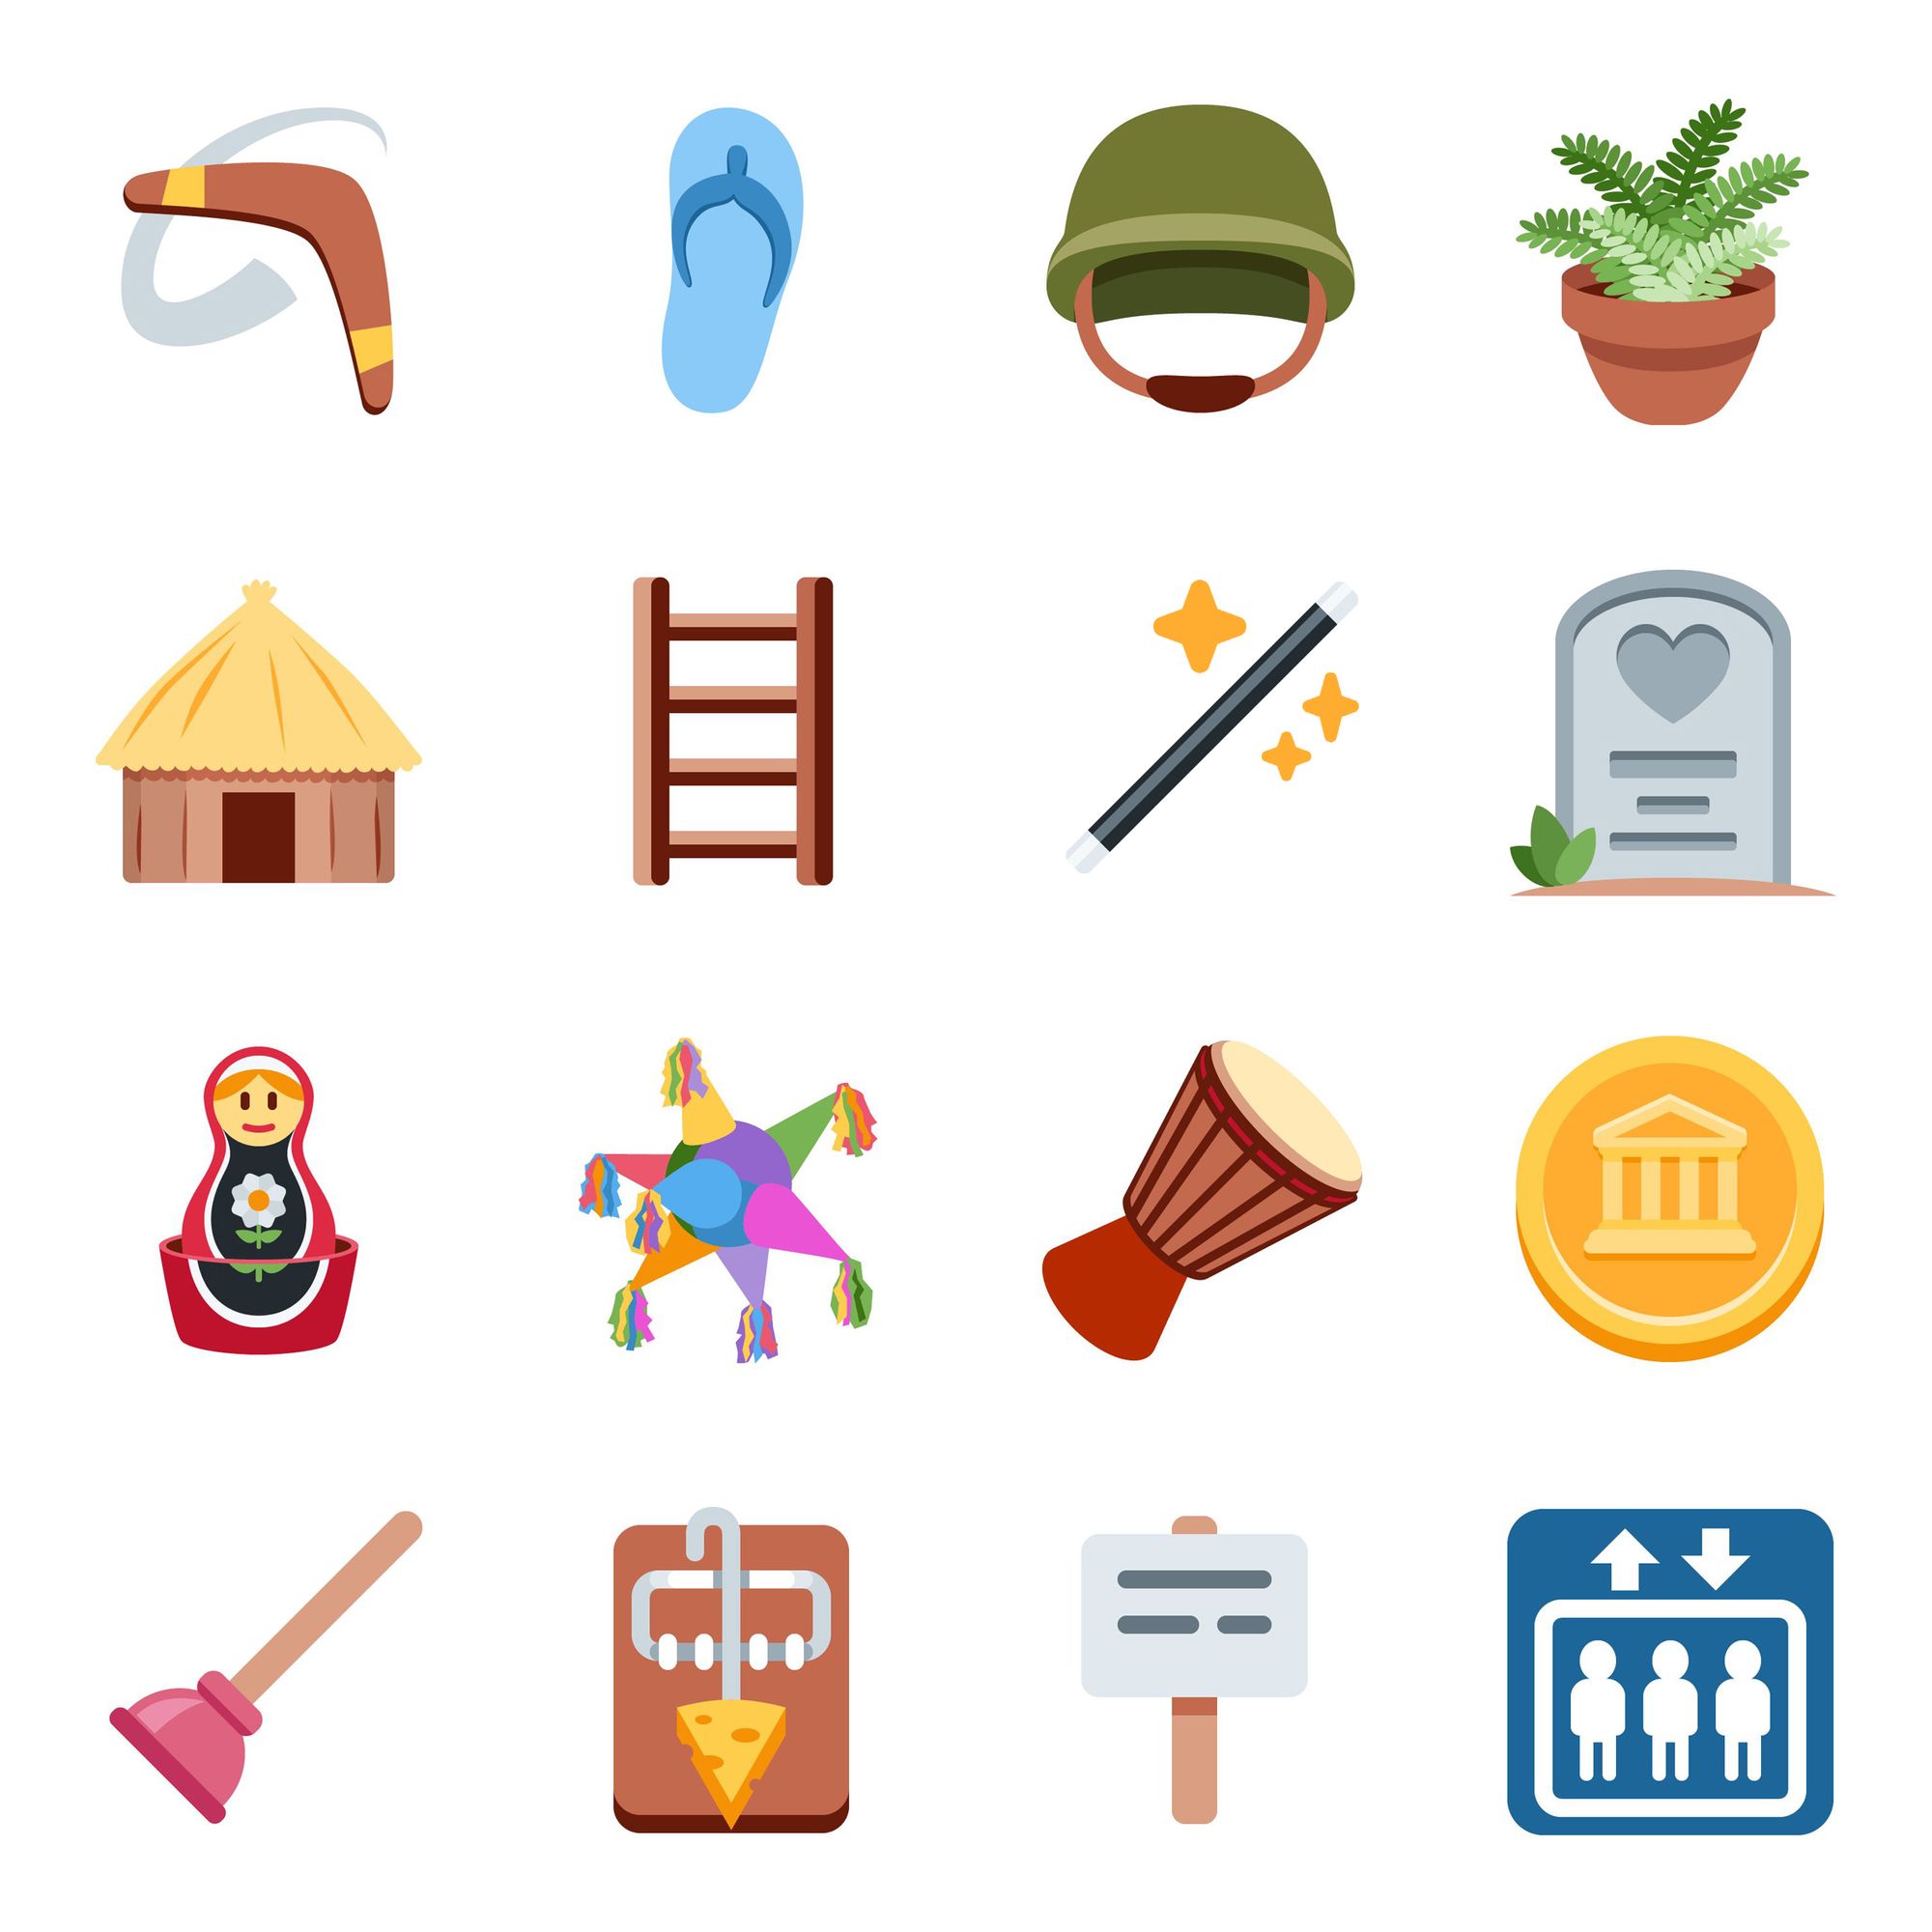 Emojipedia-Twemoji-13-Misc-Objects-and-Symbols-2-1